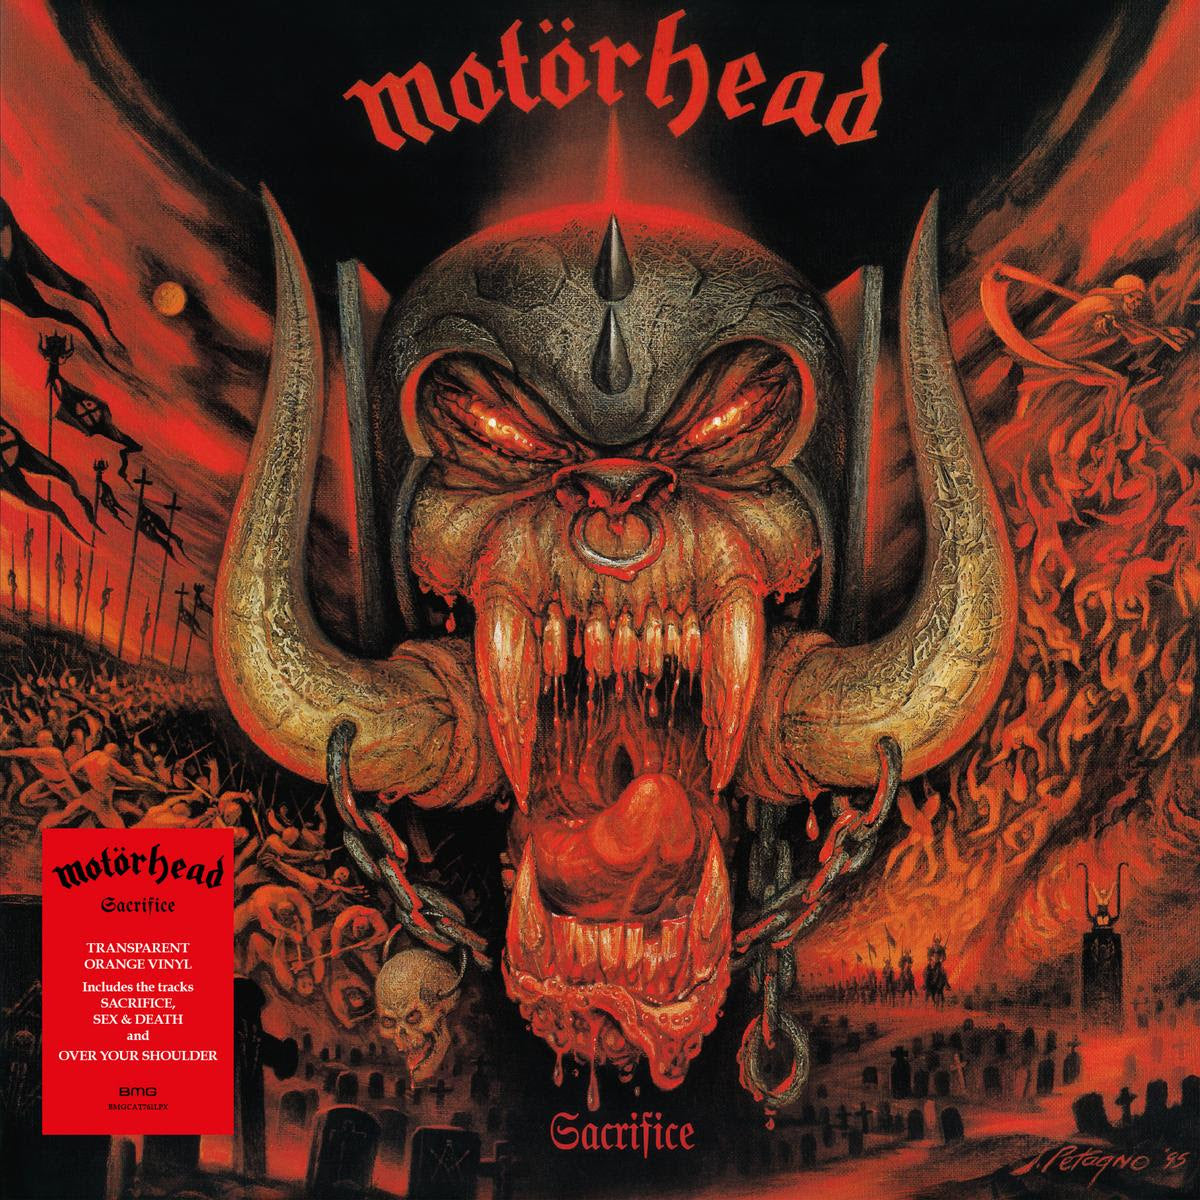 Motörhead - Sacrifice | Buy the Vinyl LP from Flying Nun Records 